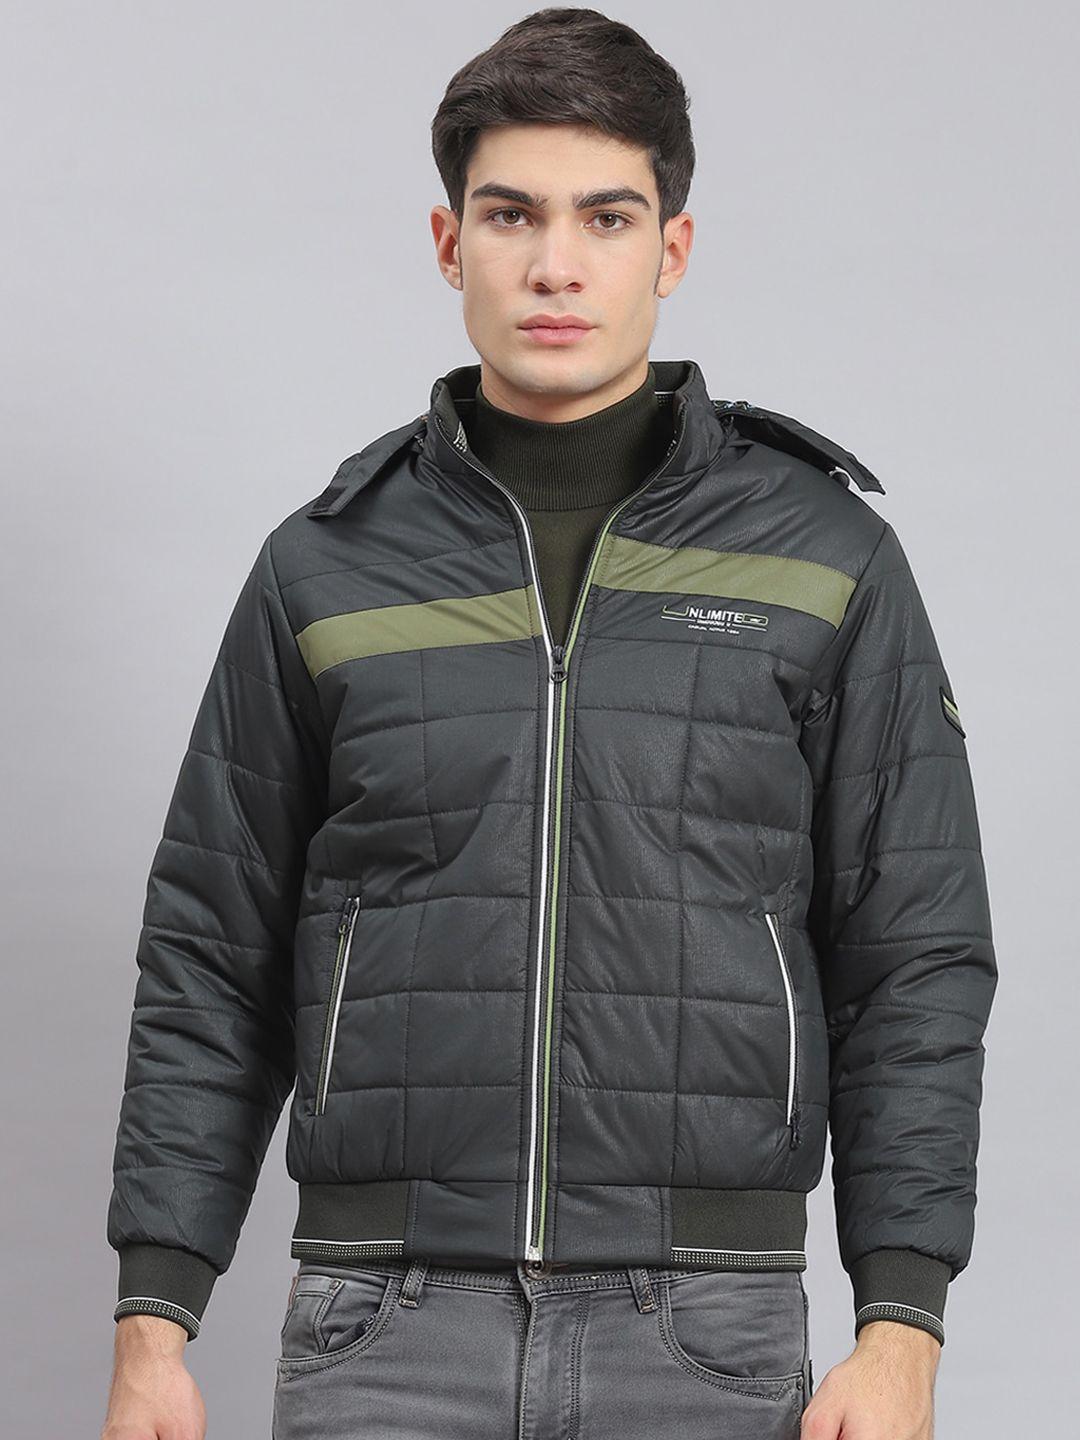 monte carlo colourblocked lightweight long sleeves hood bomber jacket